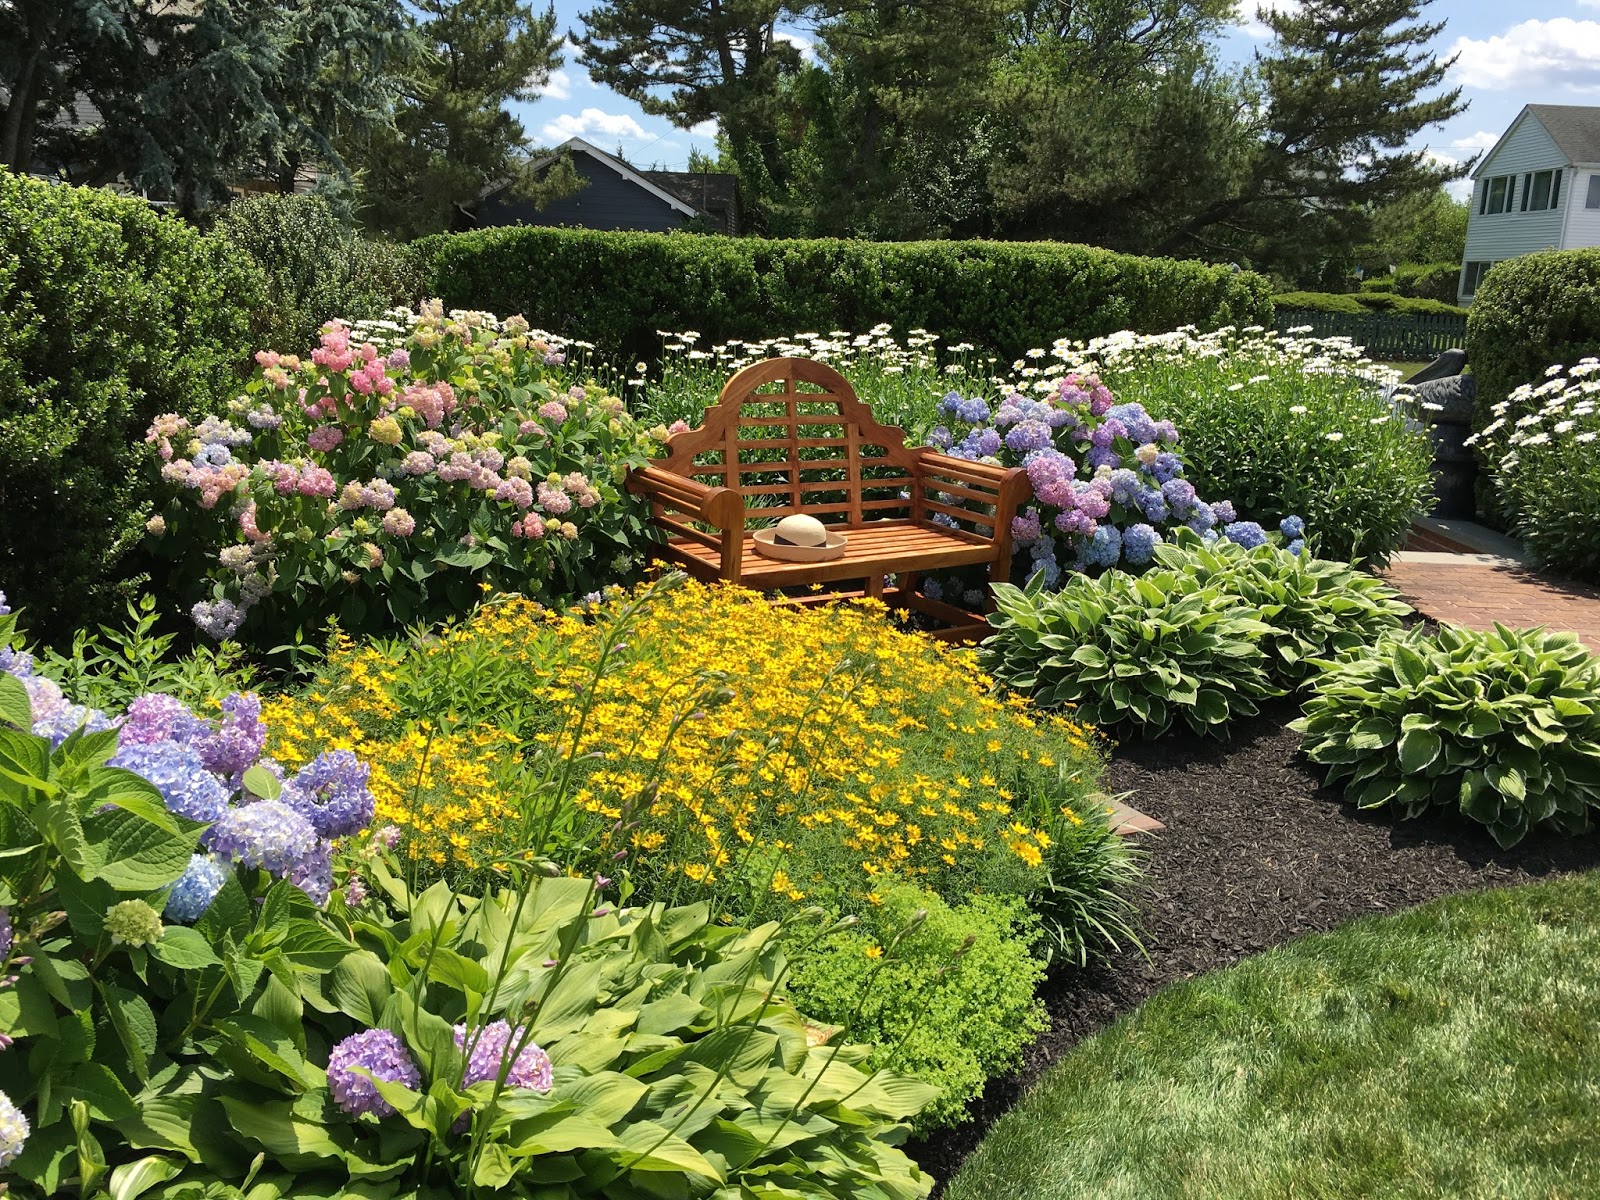 Garden bench in a beautiful home garden